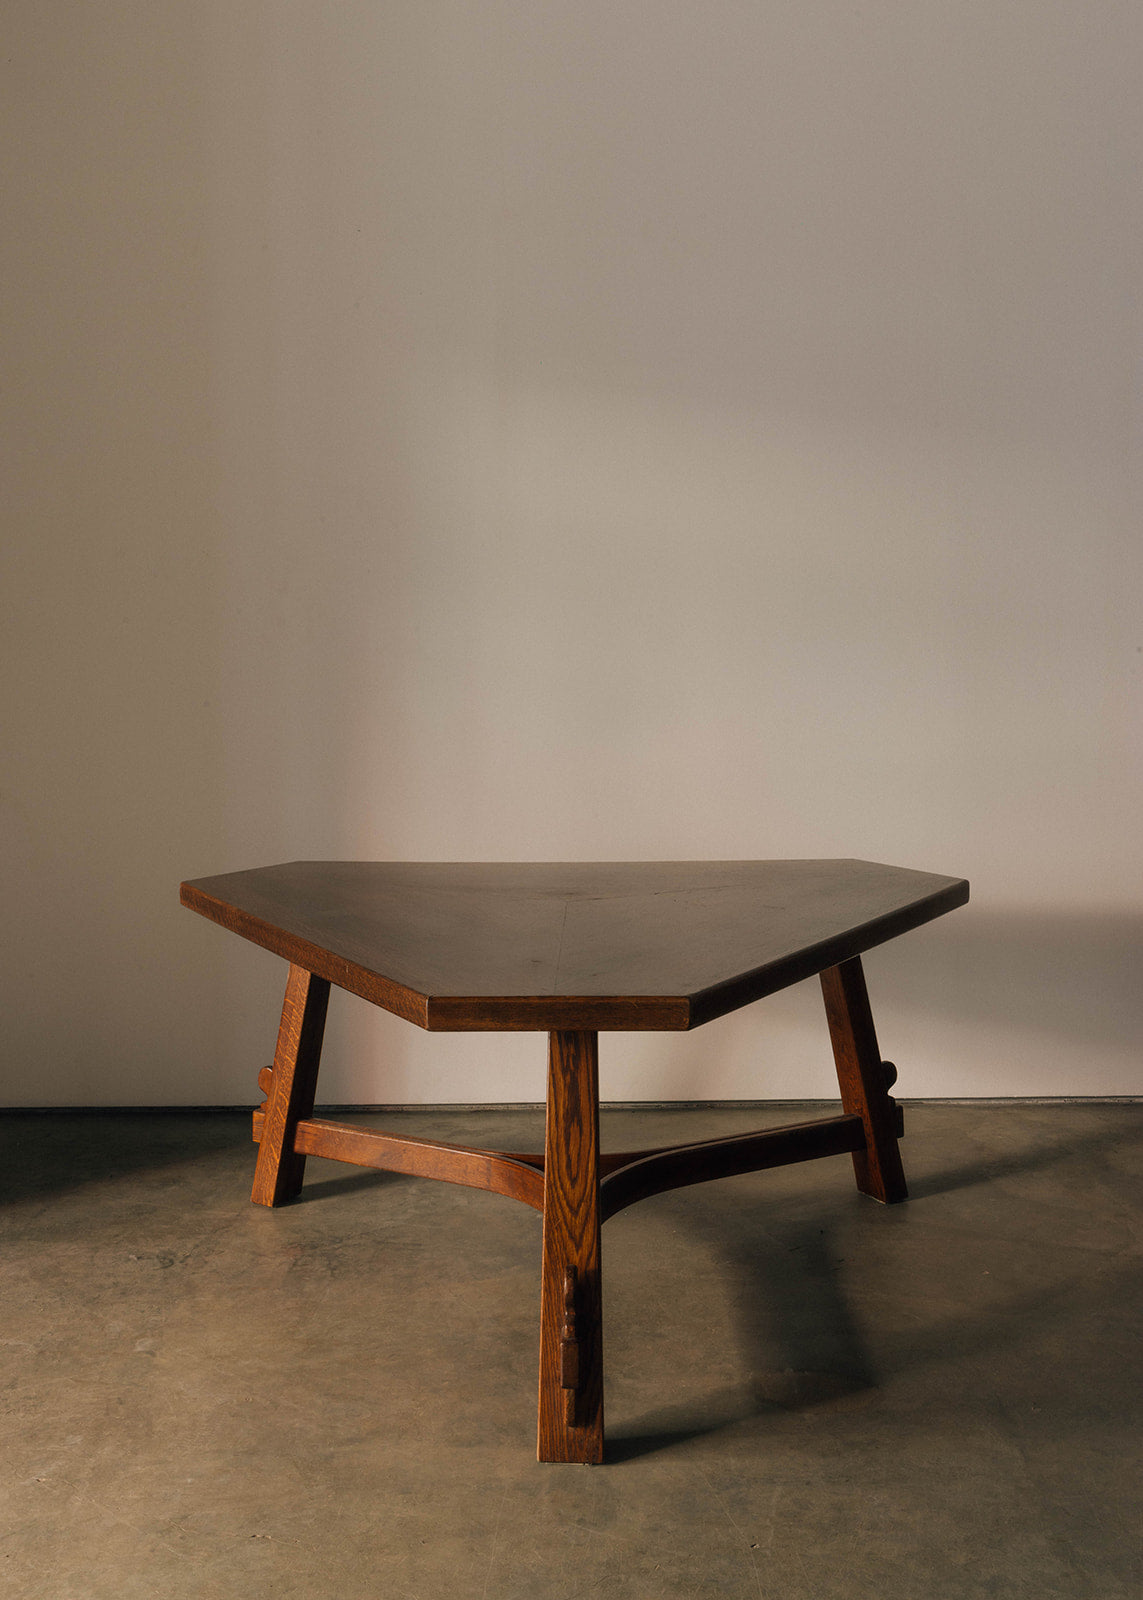 Triangular Wood Table